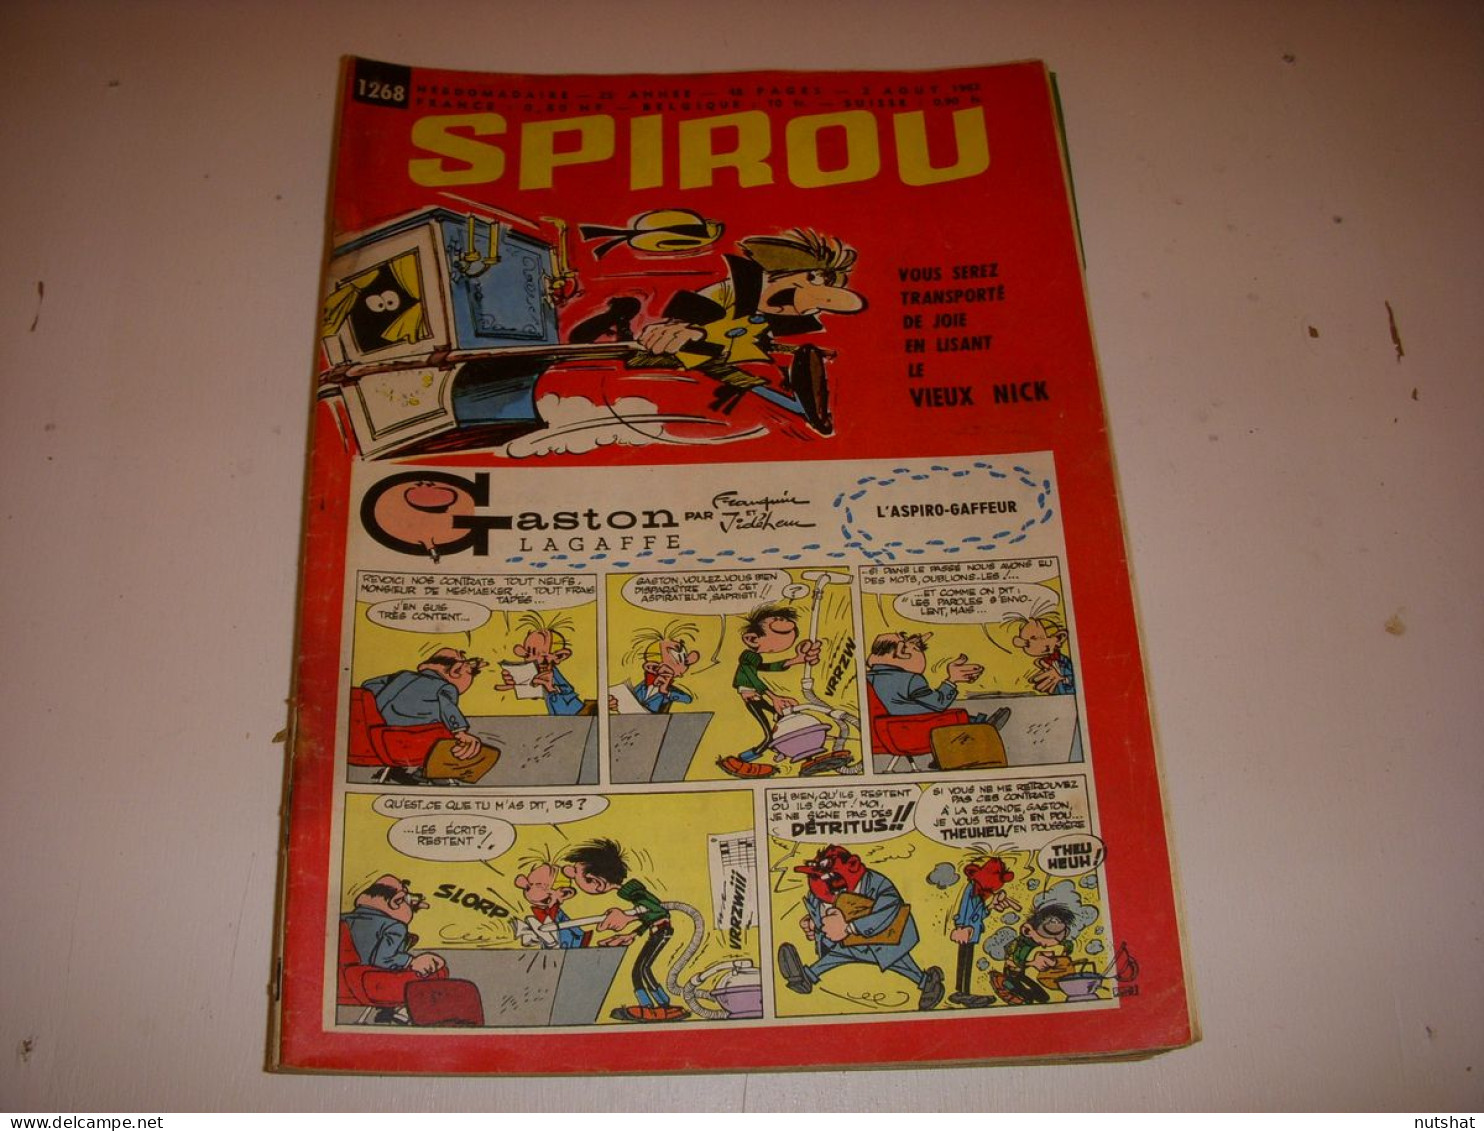 SPIROU 1268 02.08.1962 Les AUTOS A VAPEUR Bernard HALLER TOUBOUS Du TIBESTI      - Spirou Magazine